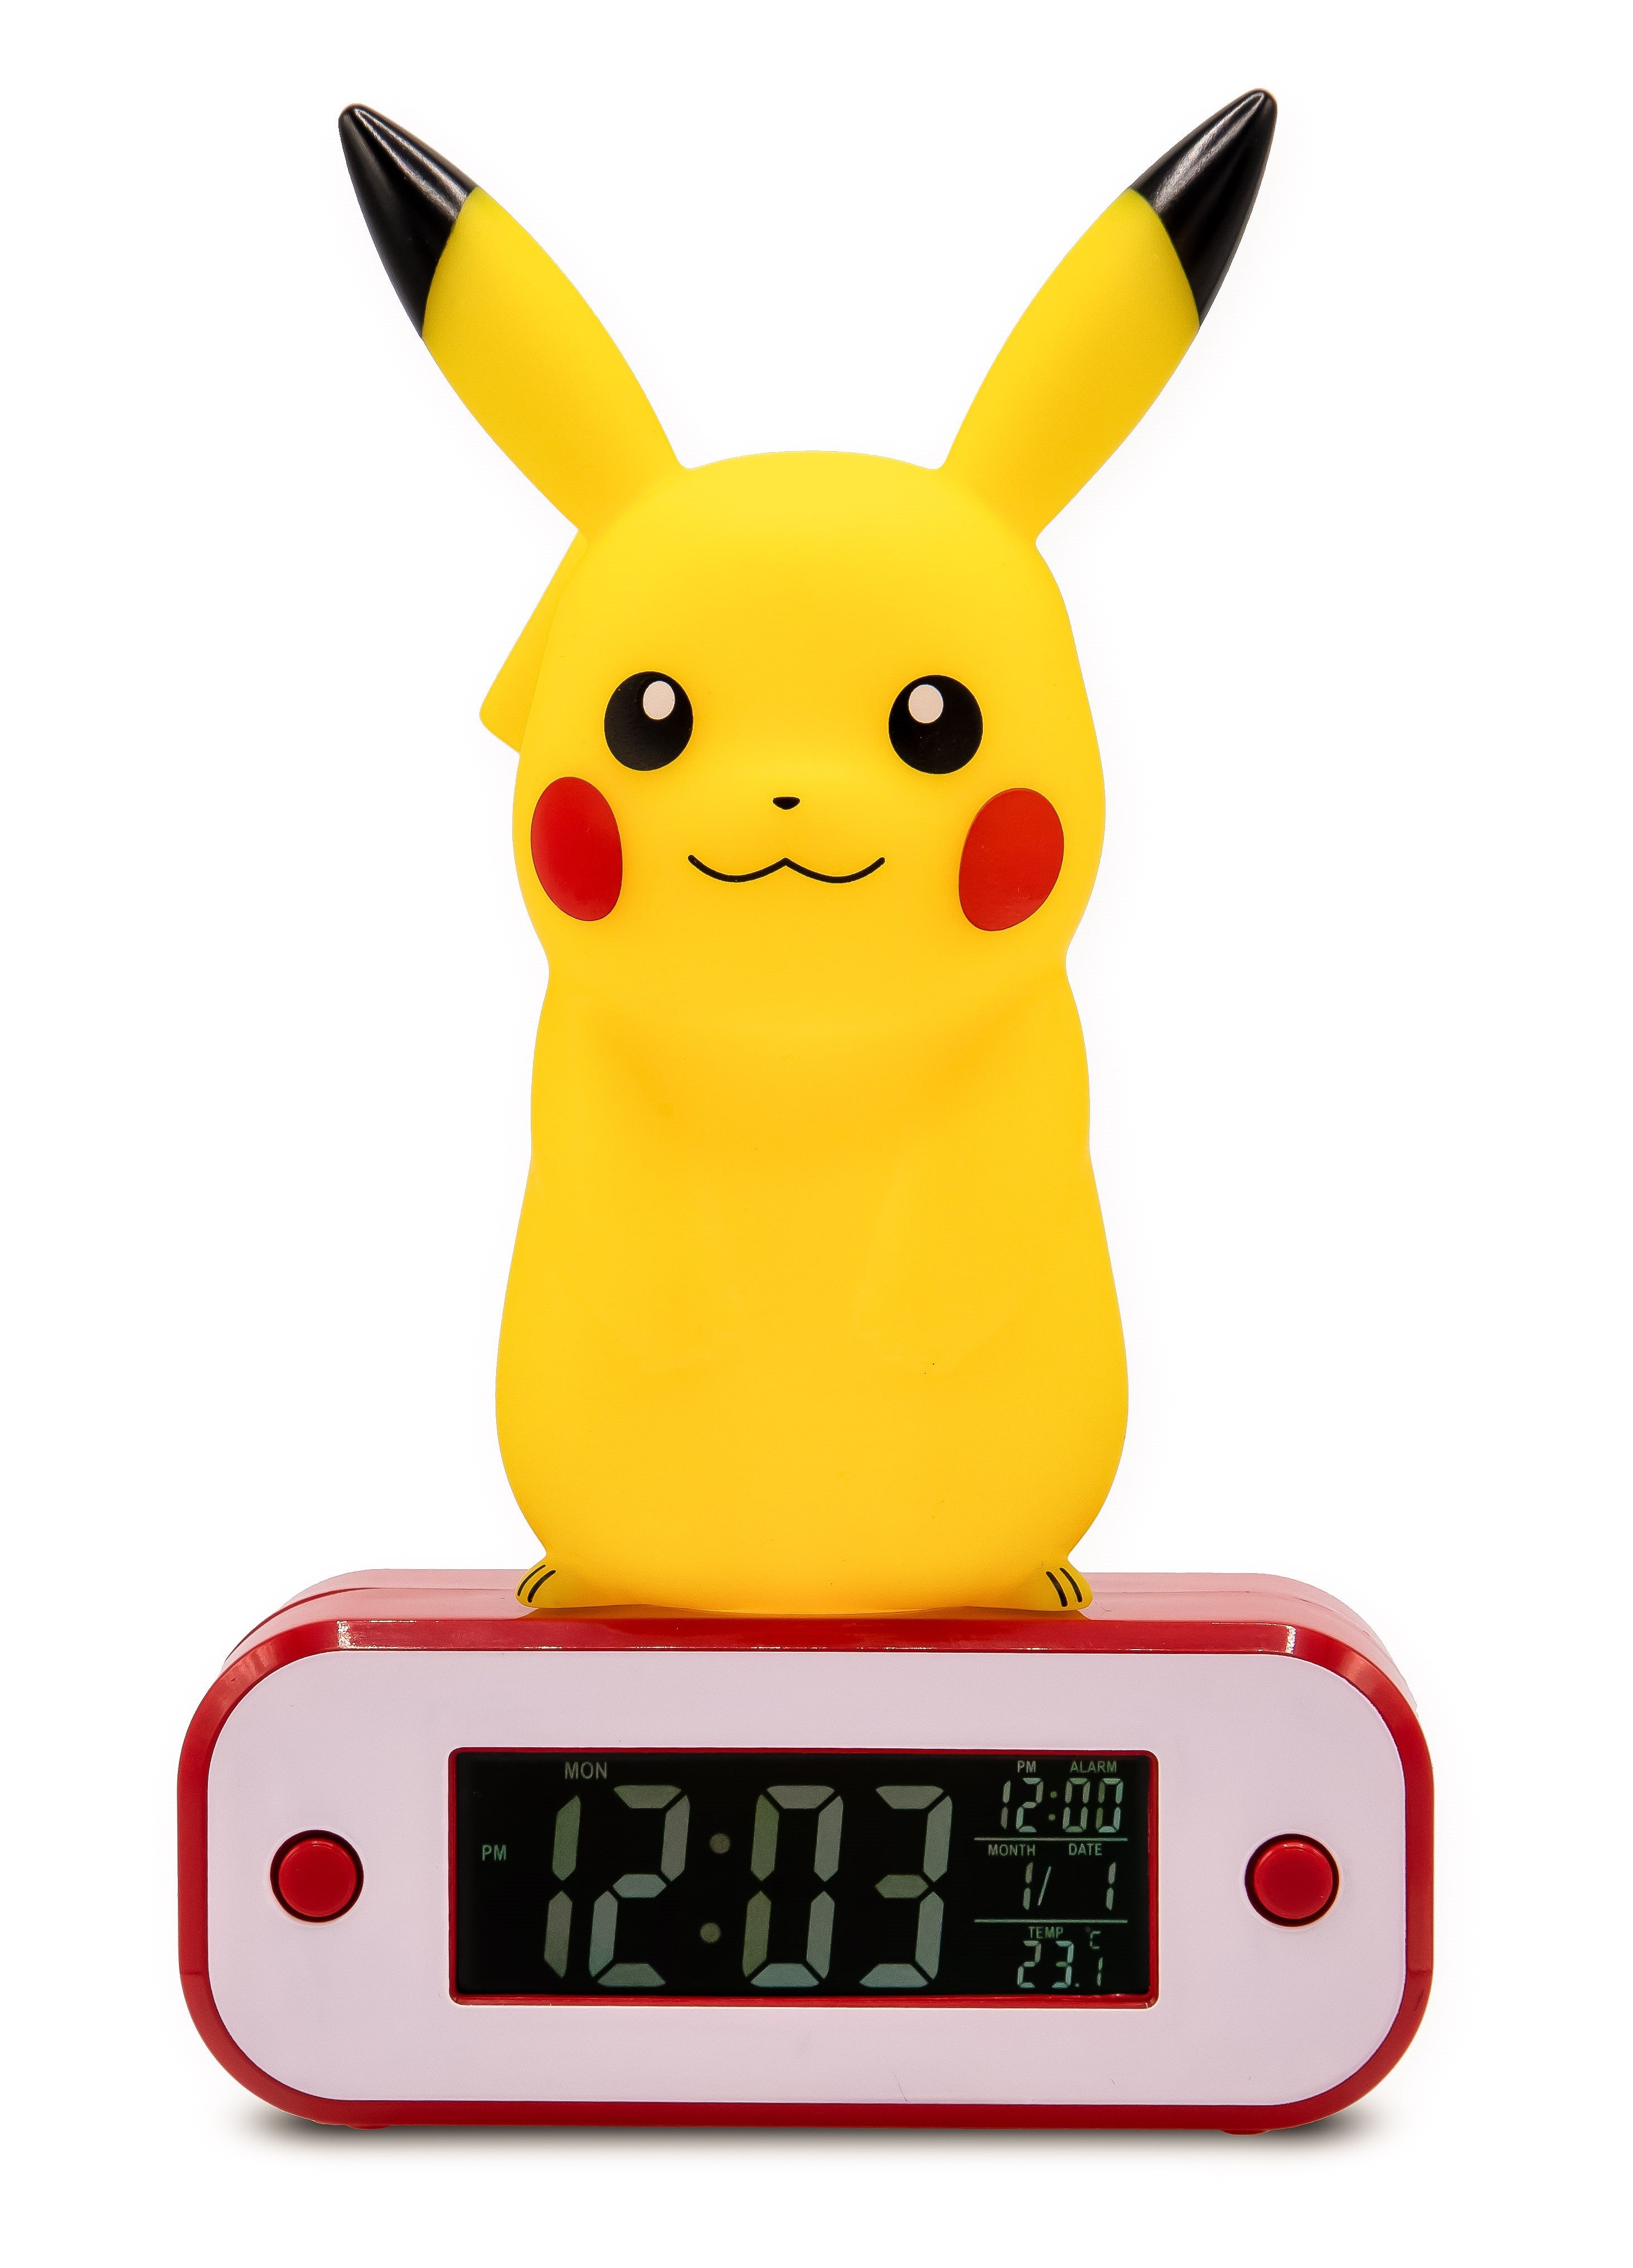 Teknofun Pokemon Pikachu Pokeball Lamp Alarm Clock Multicolor